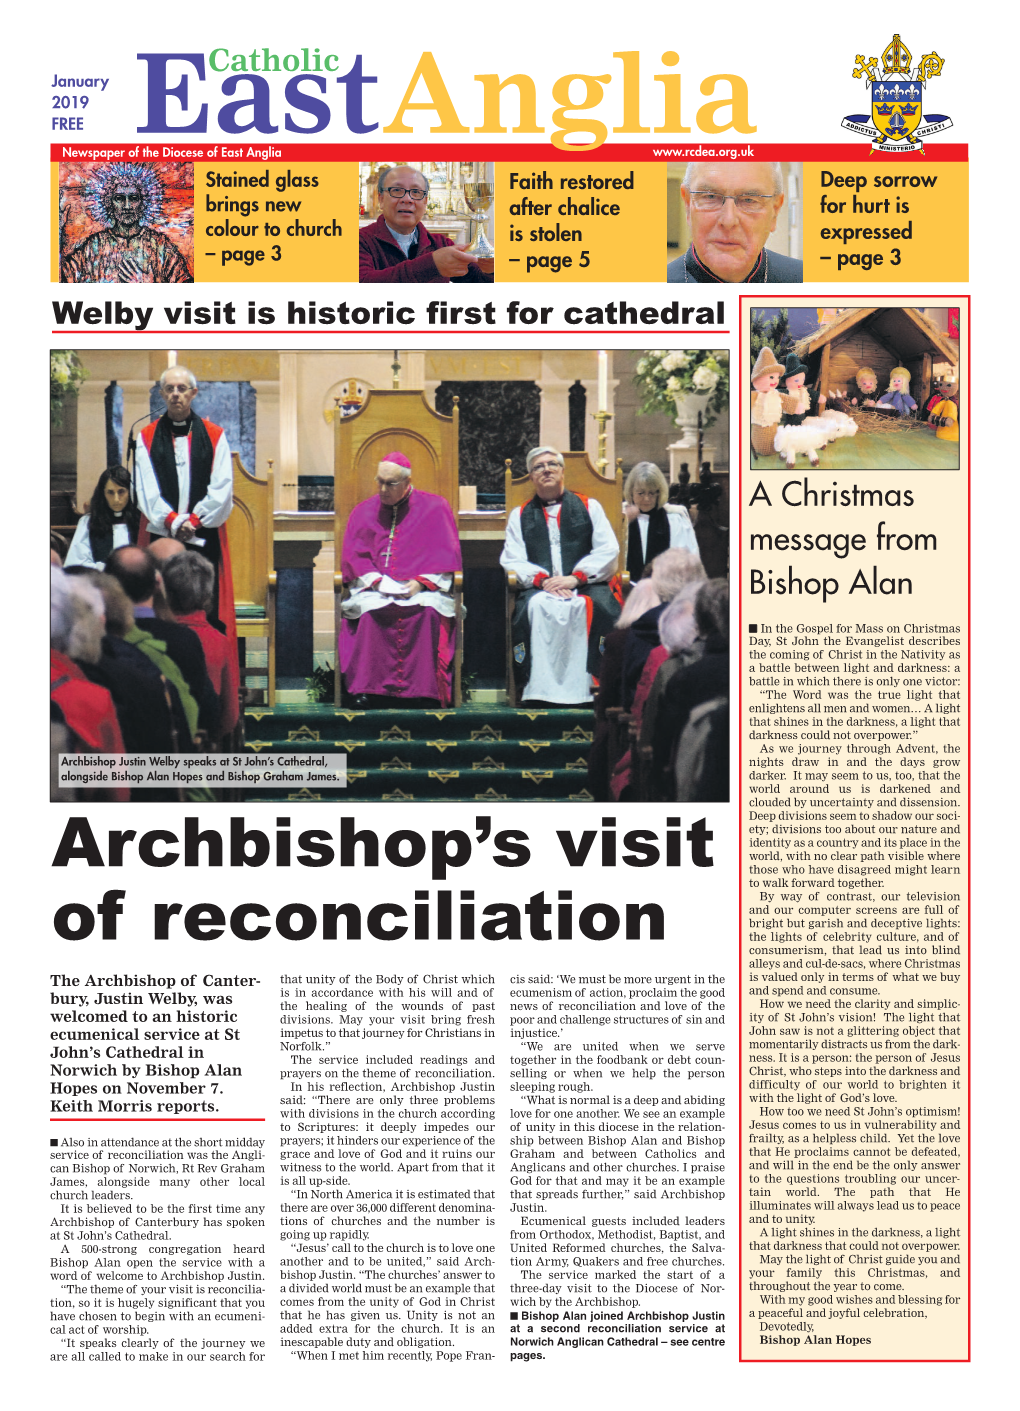 Archbishop's Visit of Reconciliation